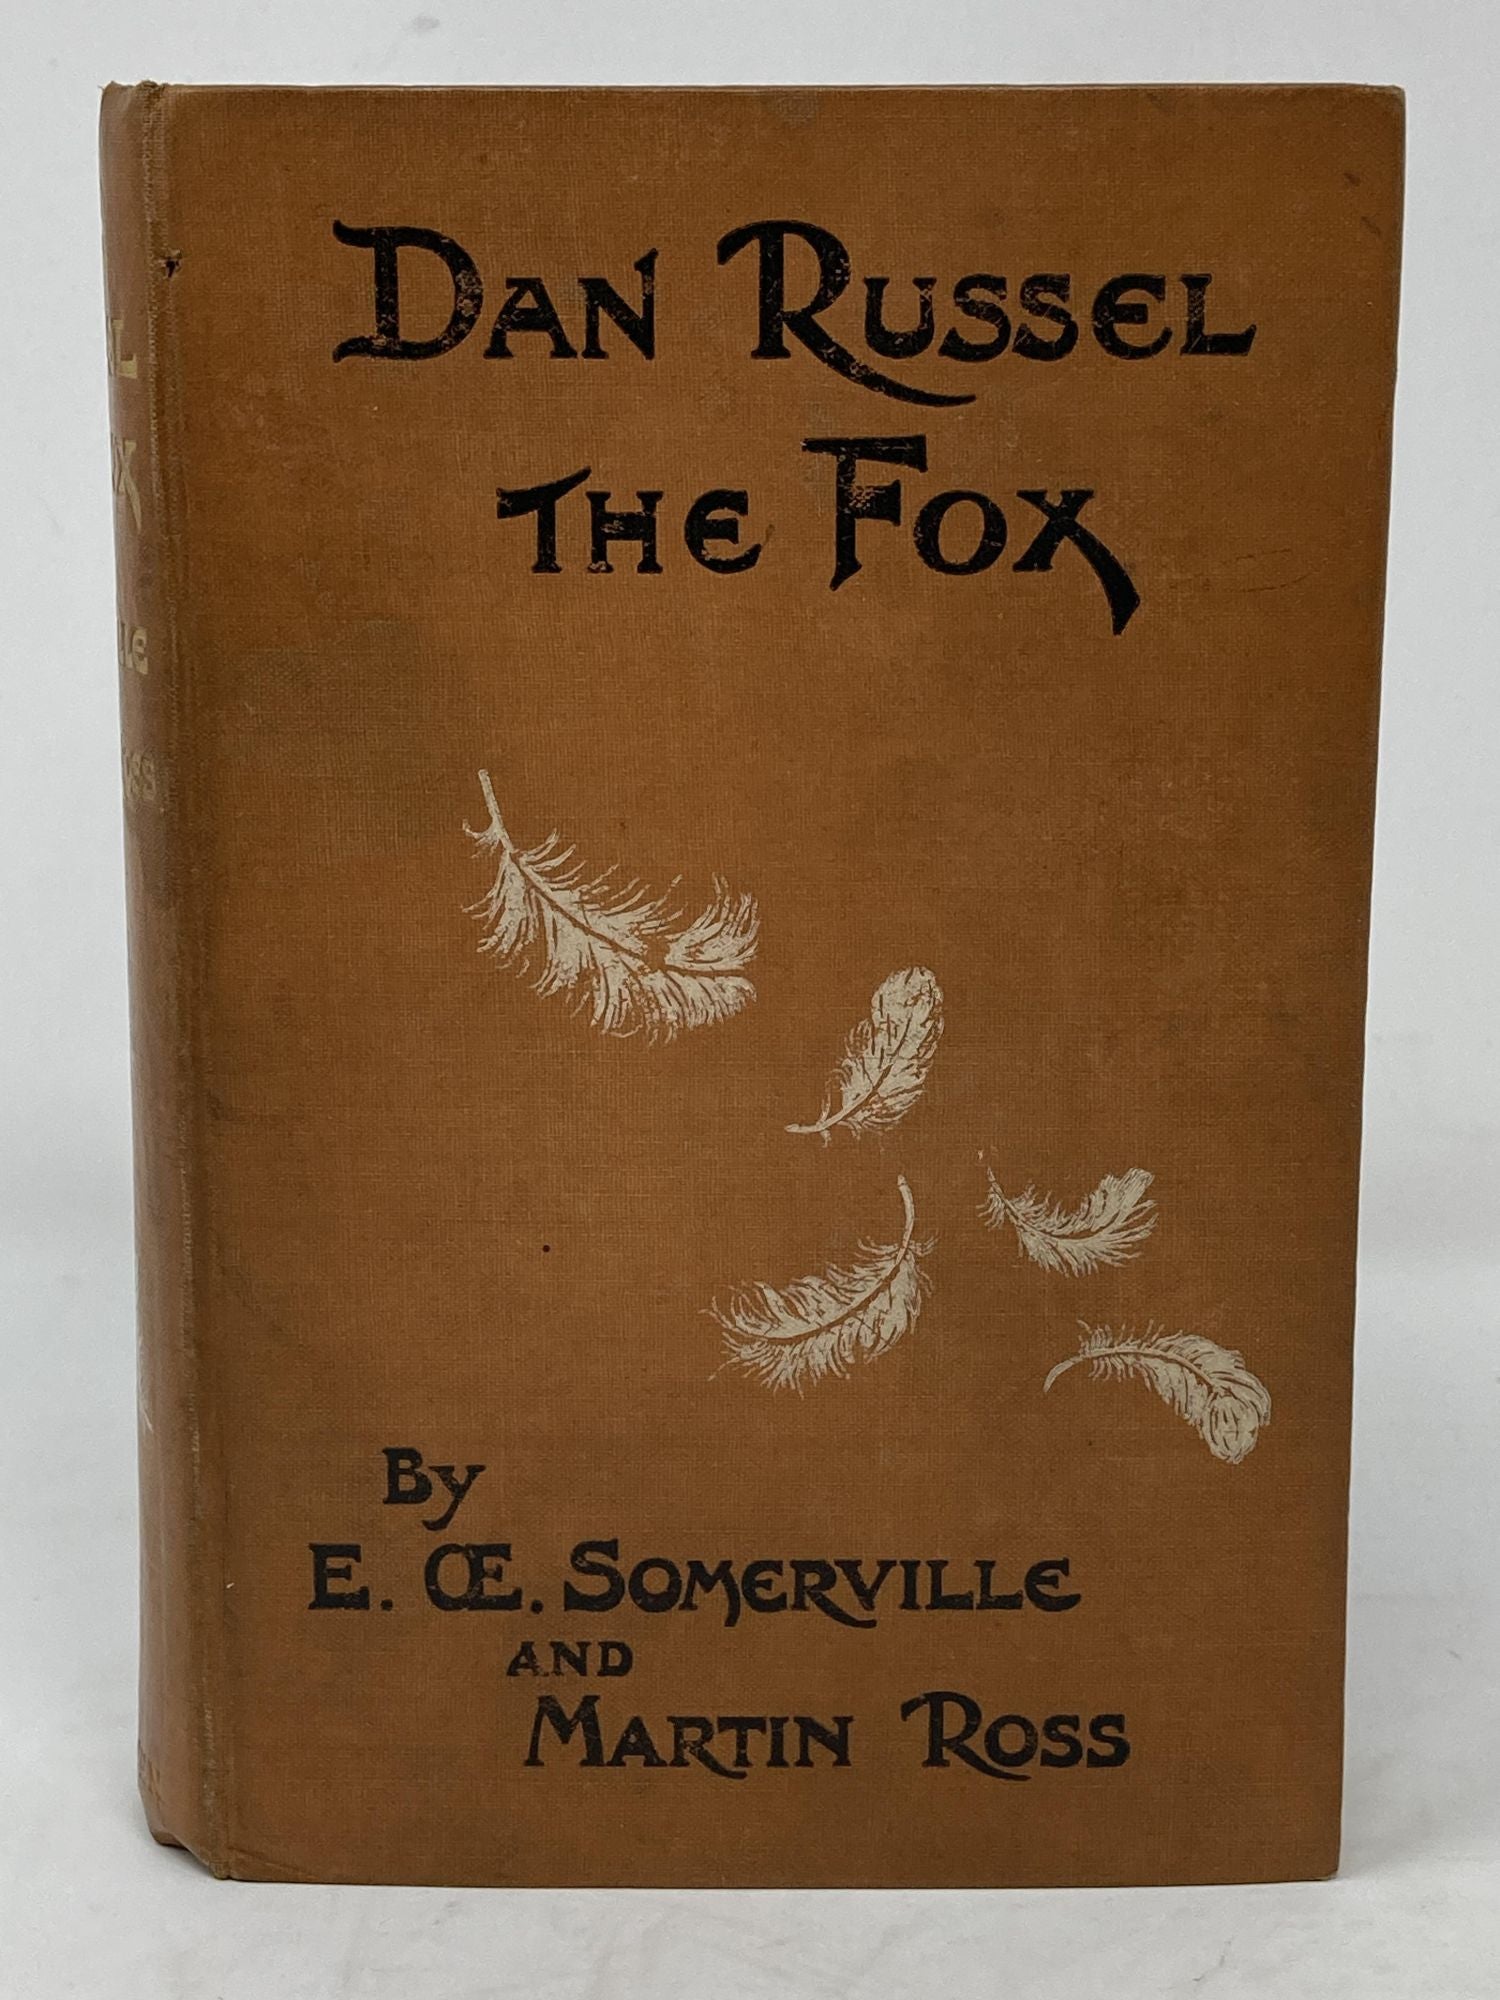 Somerville, E. OE. and Martin Ross - Dan Russel the Fox